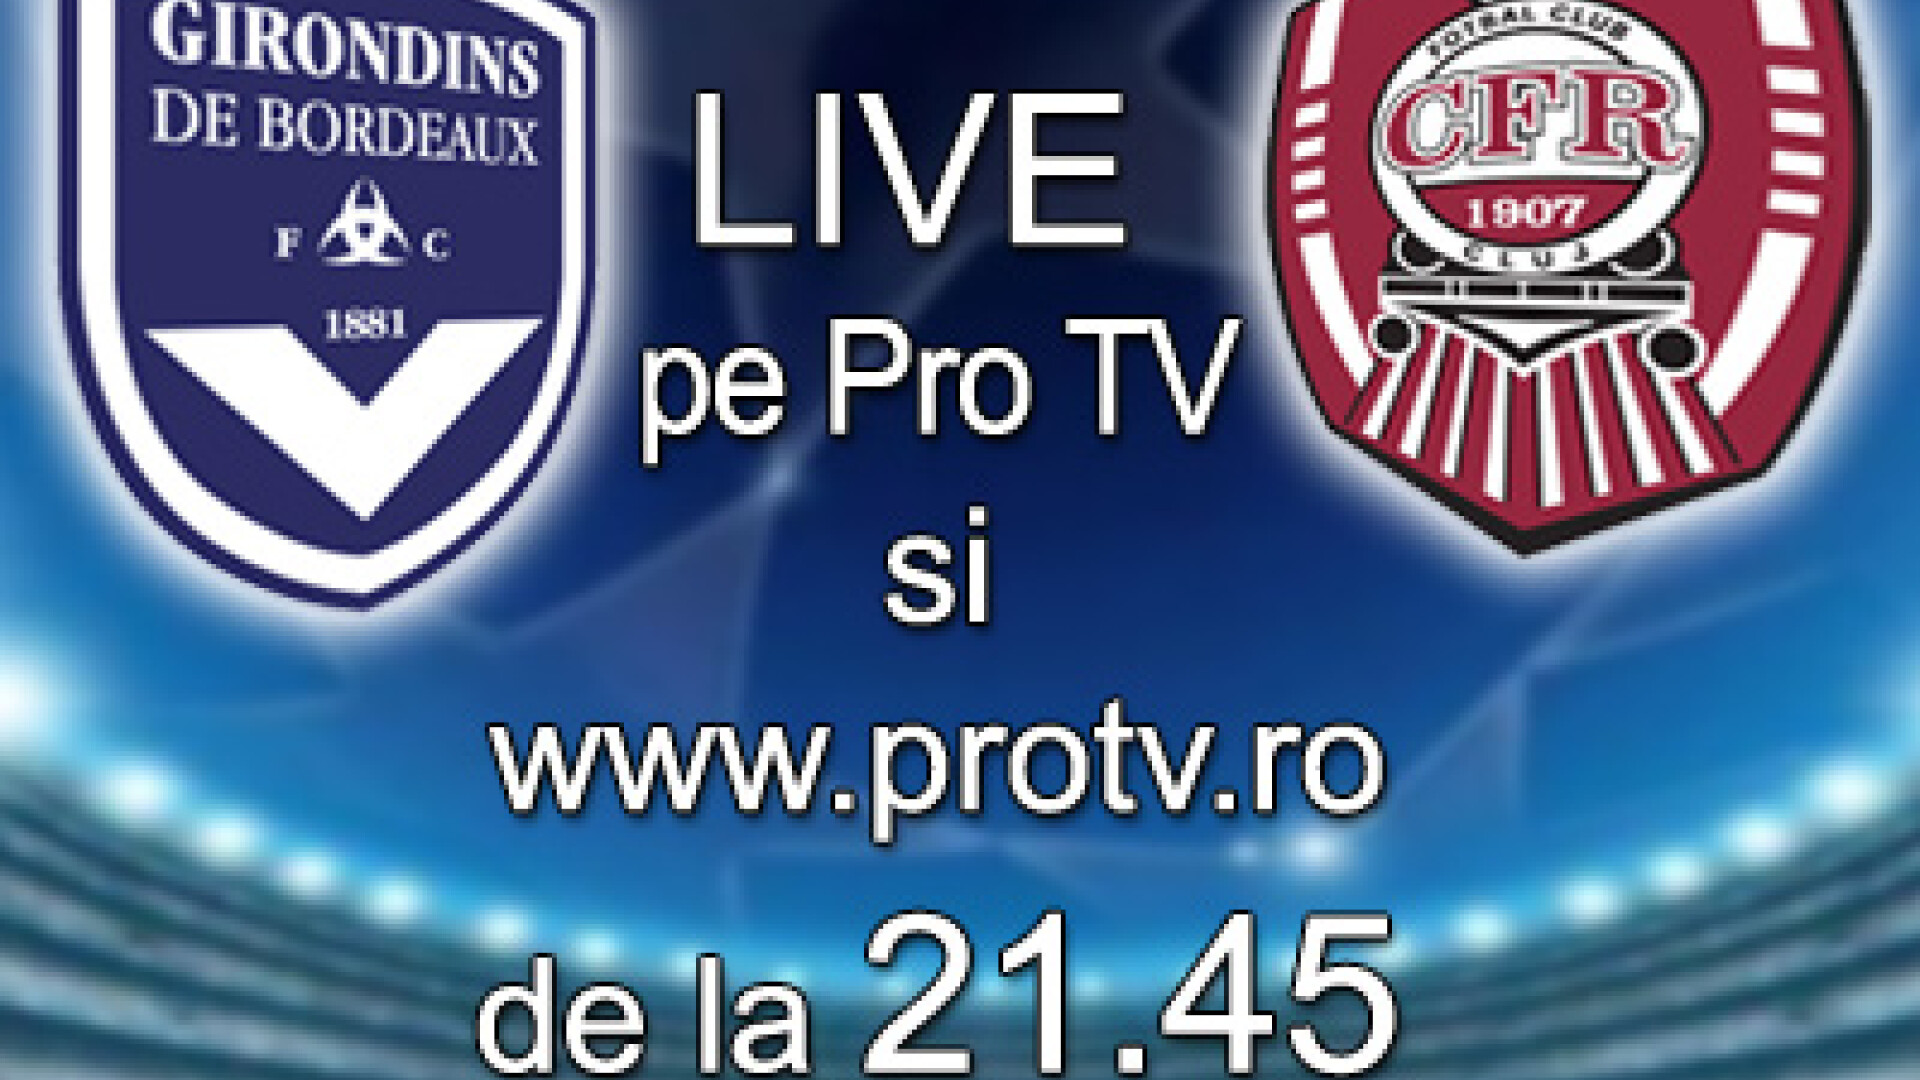 Bordeaux vs.CFR Cluj! Live, de la 21.45, pe ProTV si www.protv.ro